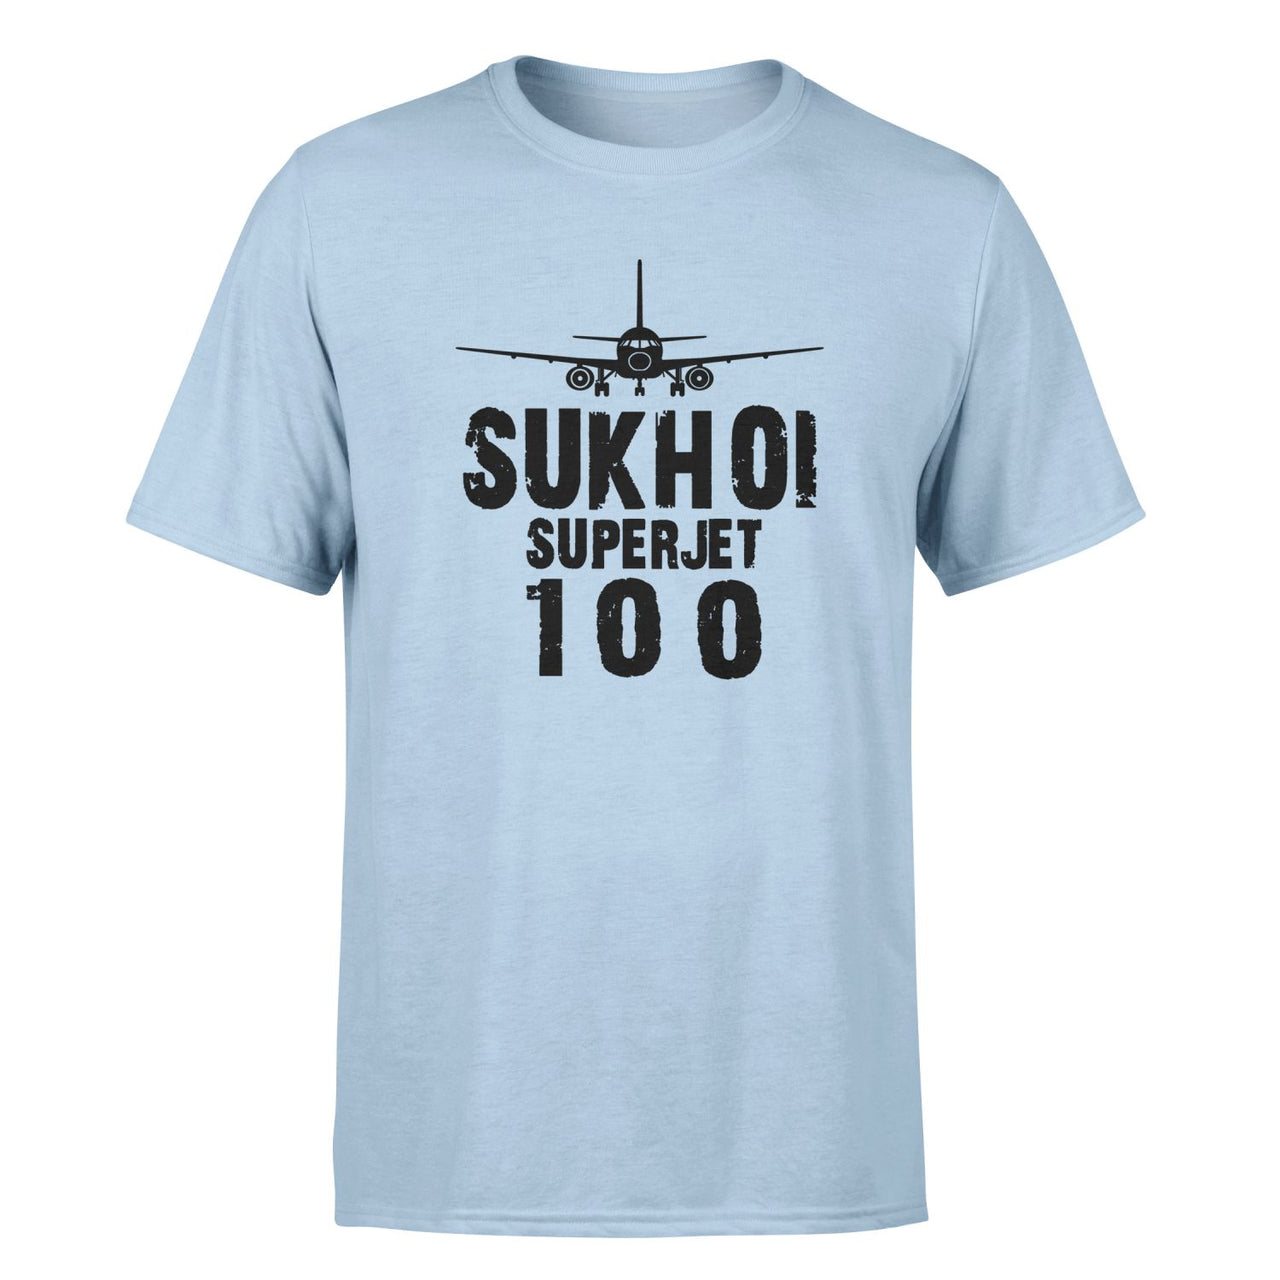 Sukhoi Superjet 100 & Plane Designed T-Shirts